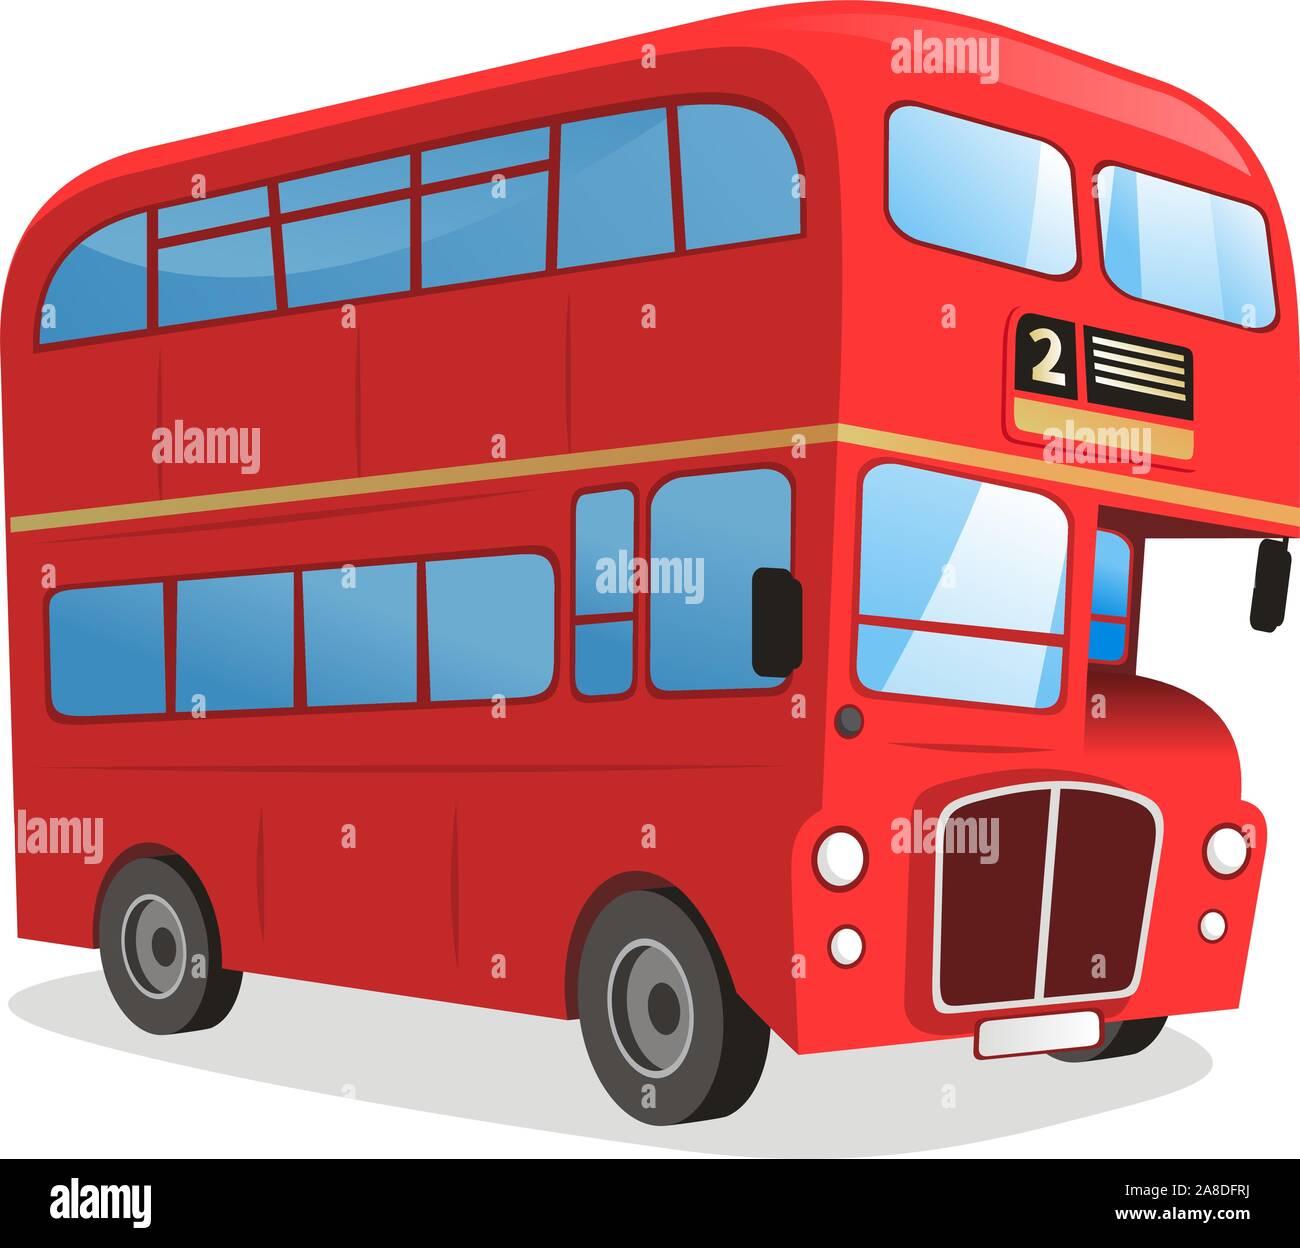 London Double decker bus cartoon illustration Stock Vector